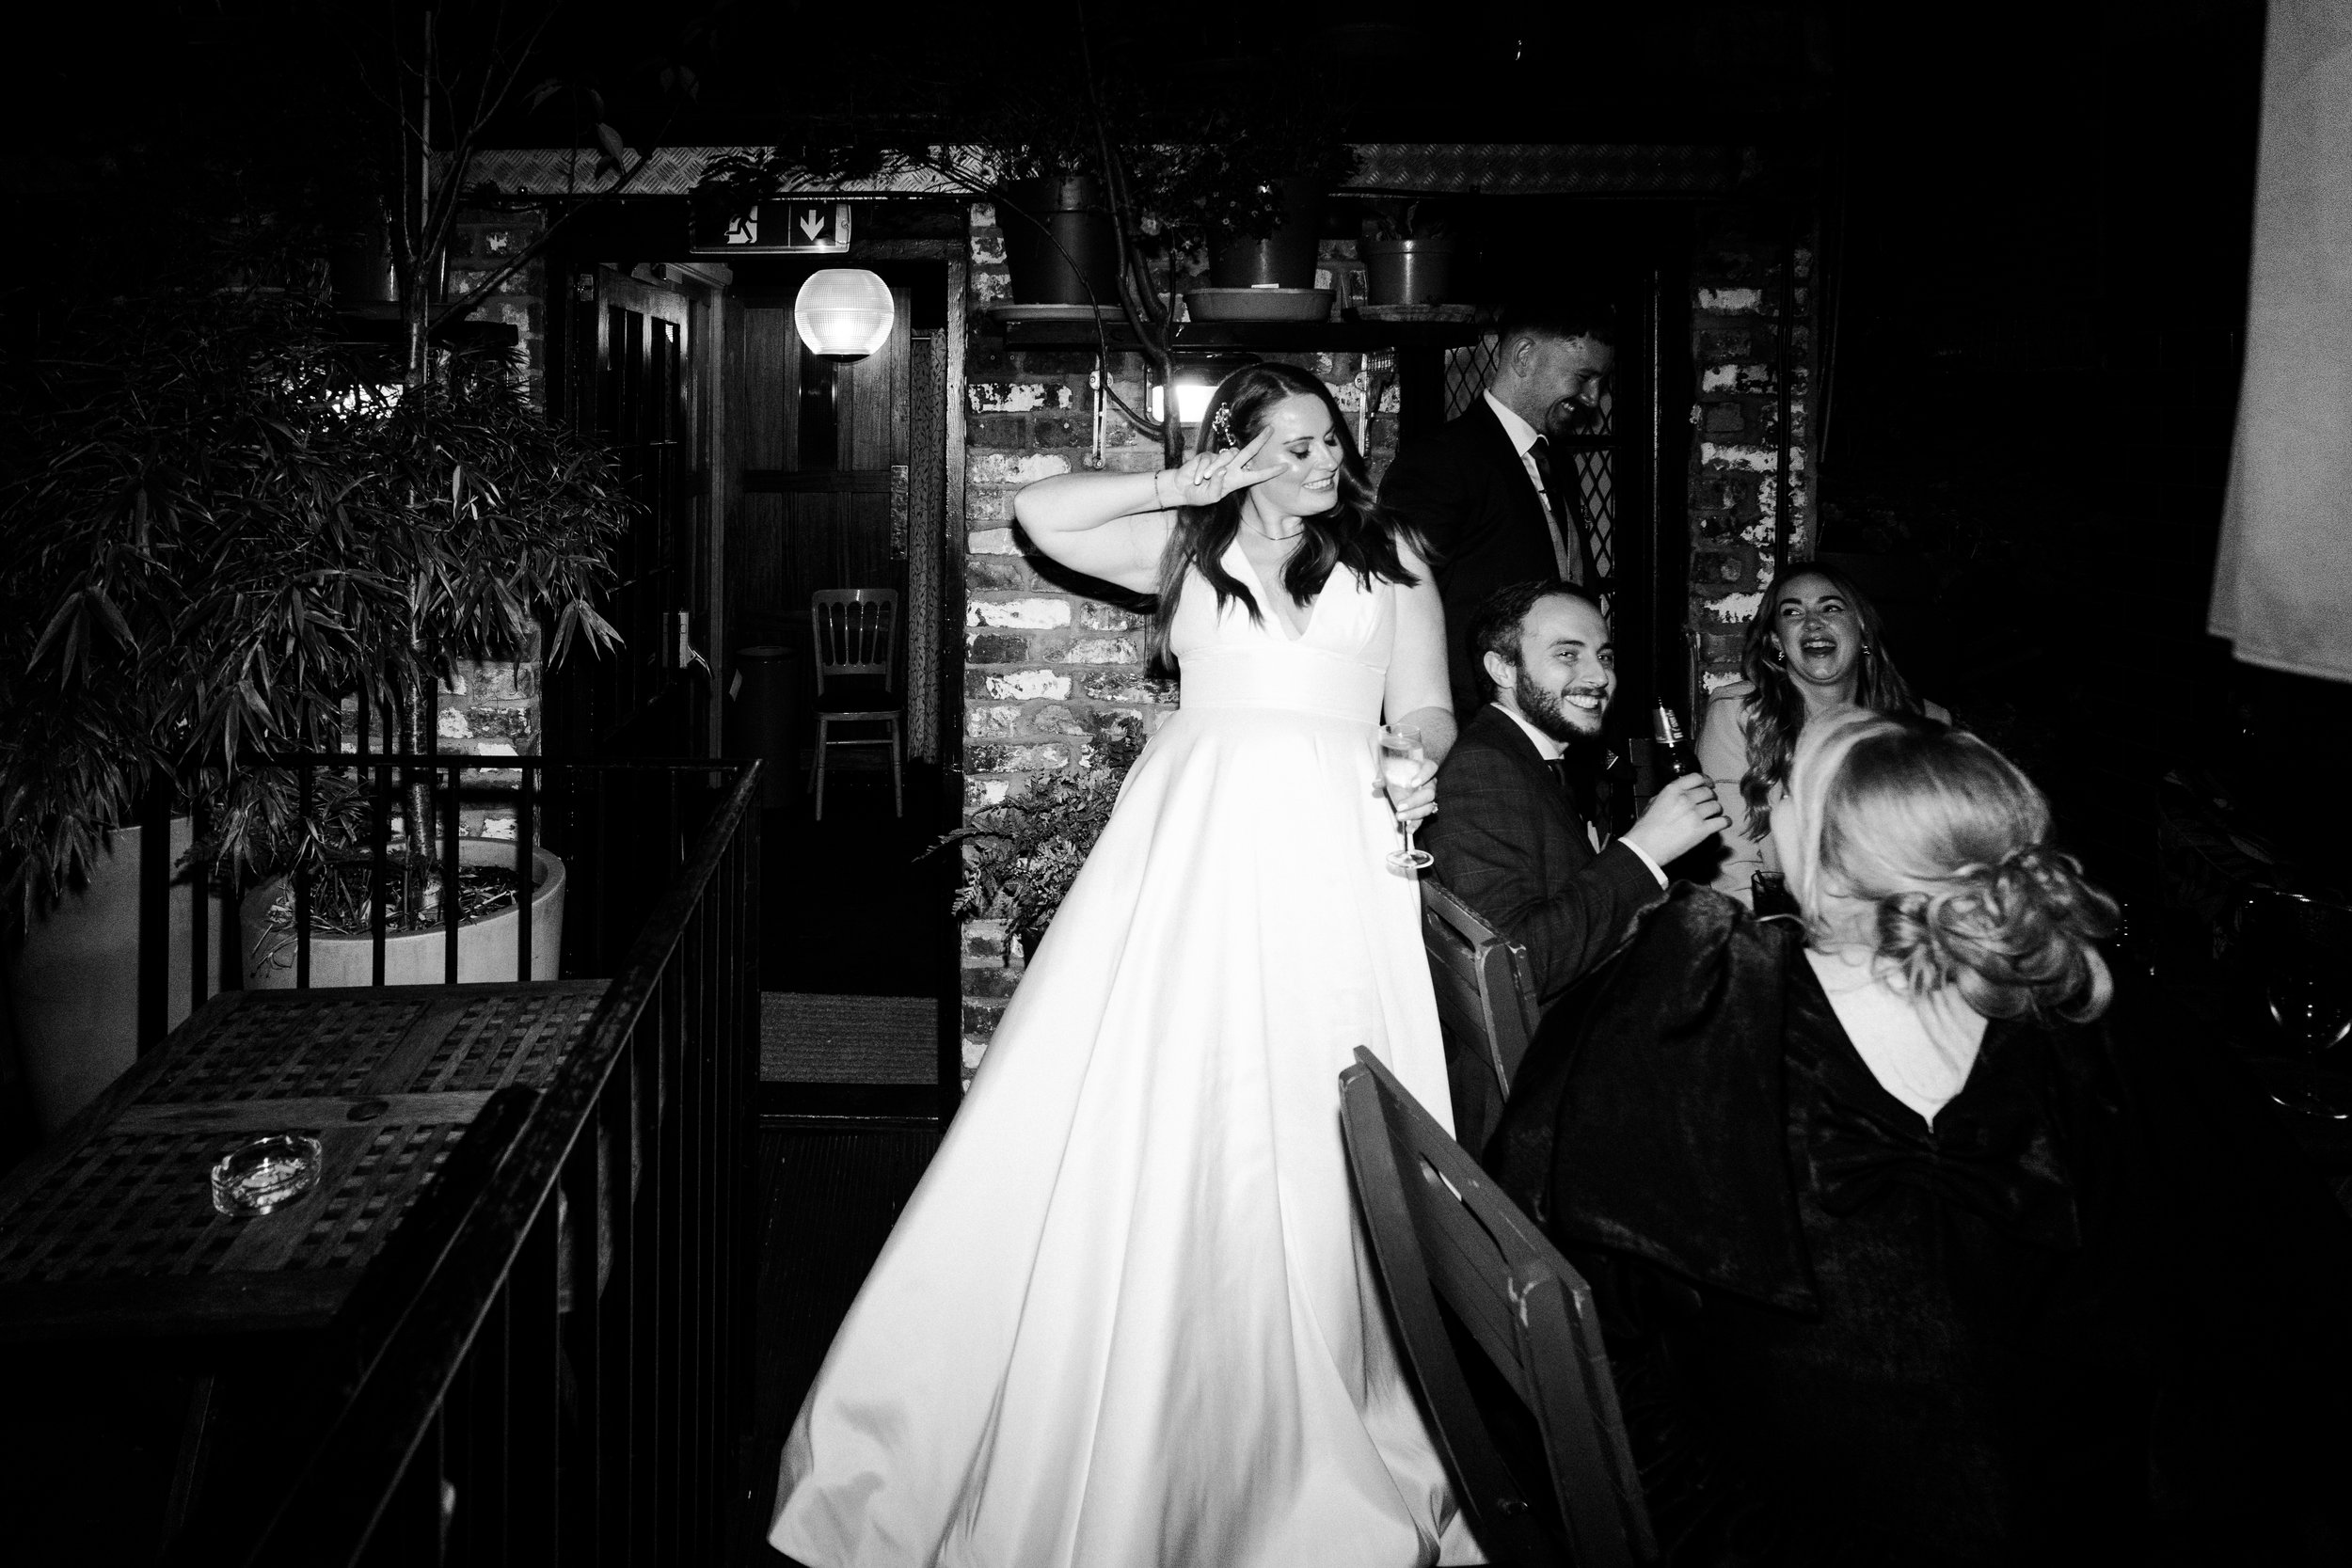 Joanna & Ian's Union Club, Soho Wedding - Jay Anderson Wedding Photography & Film London 629.jpg